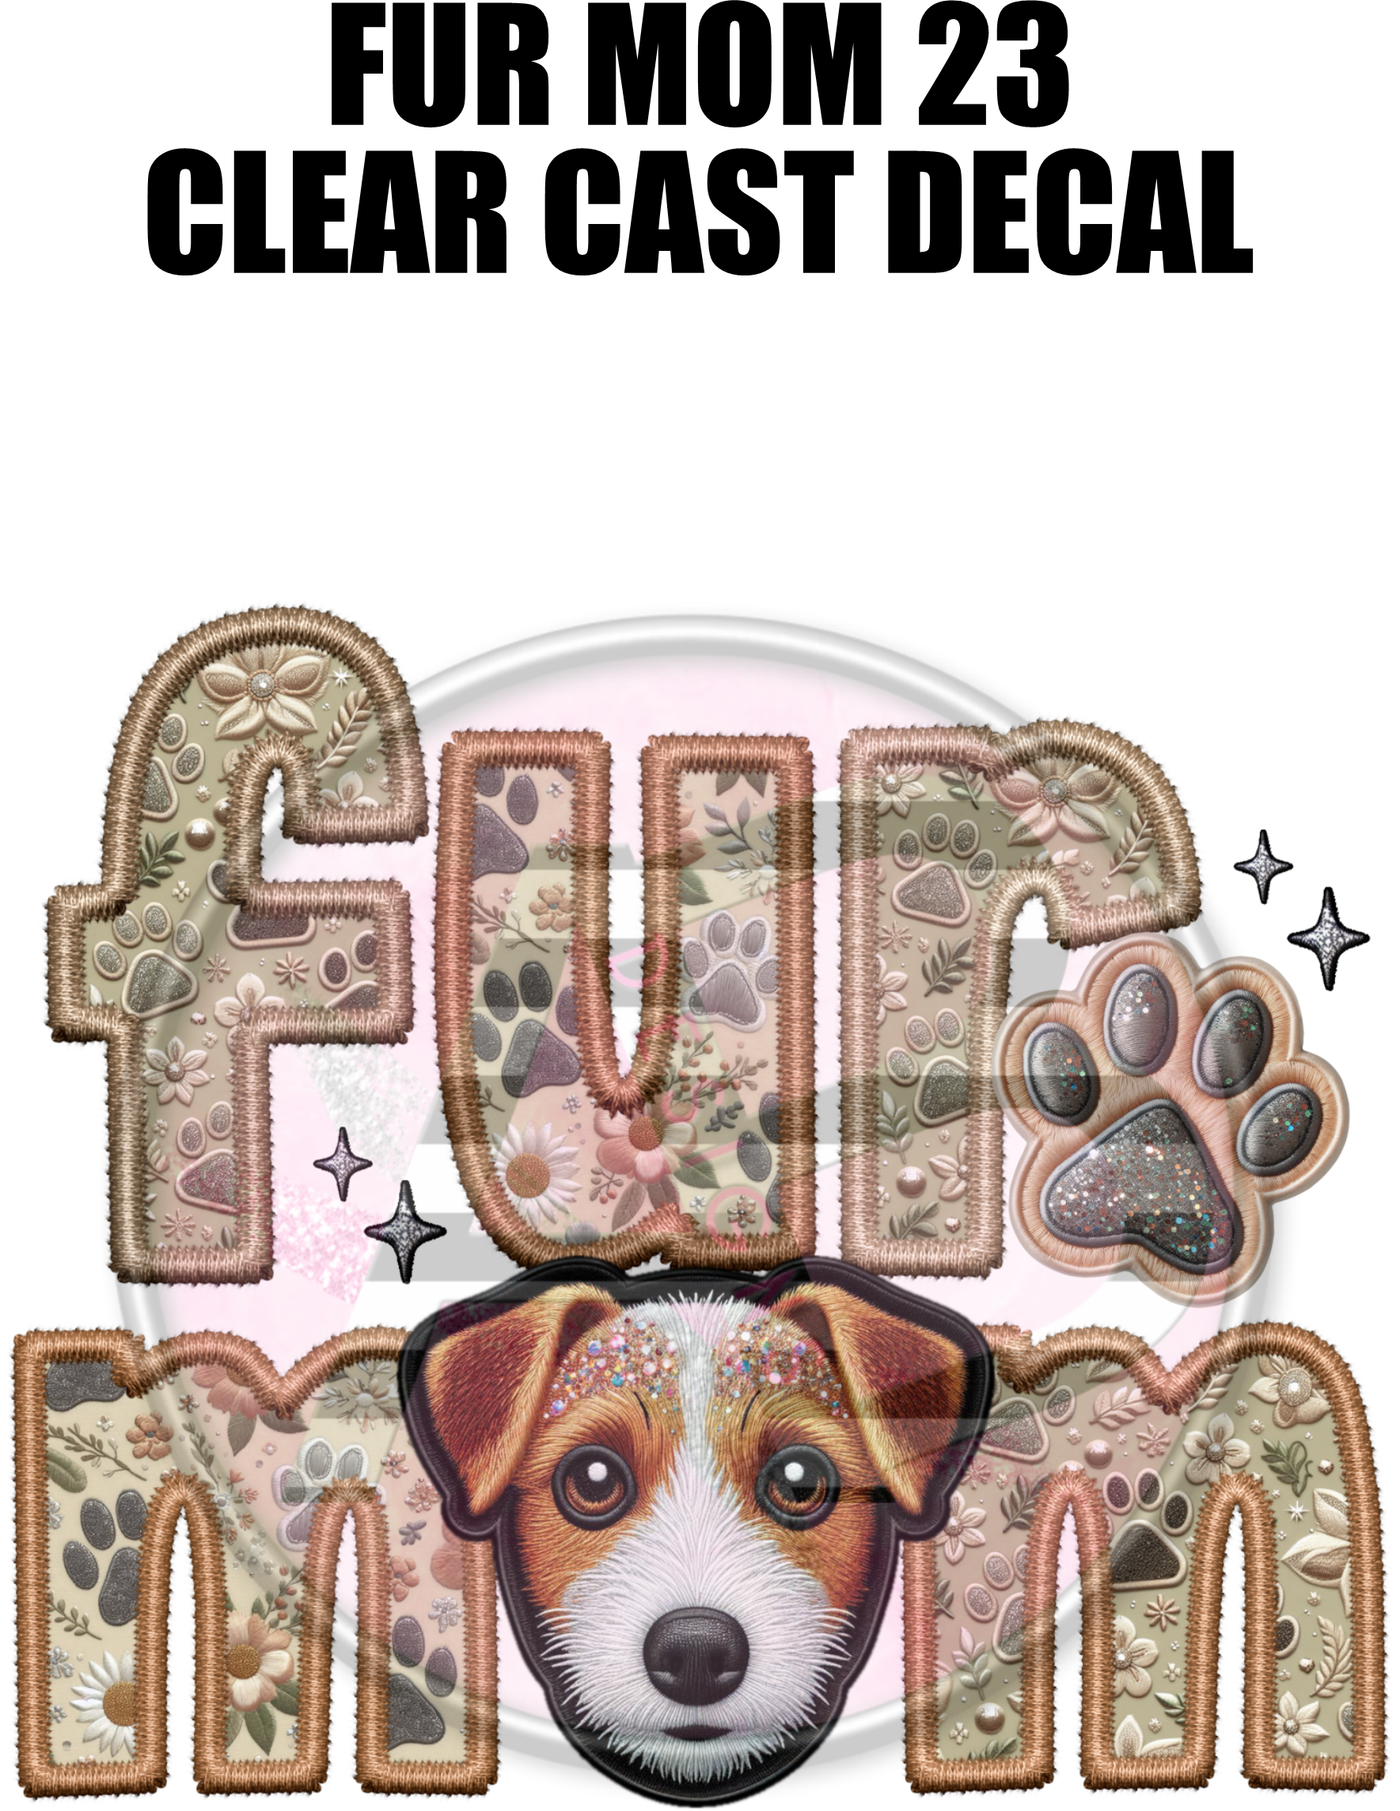 Fur Mom 23 - Clear Cast Decal